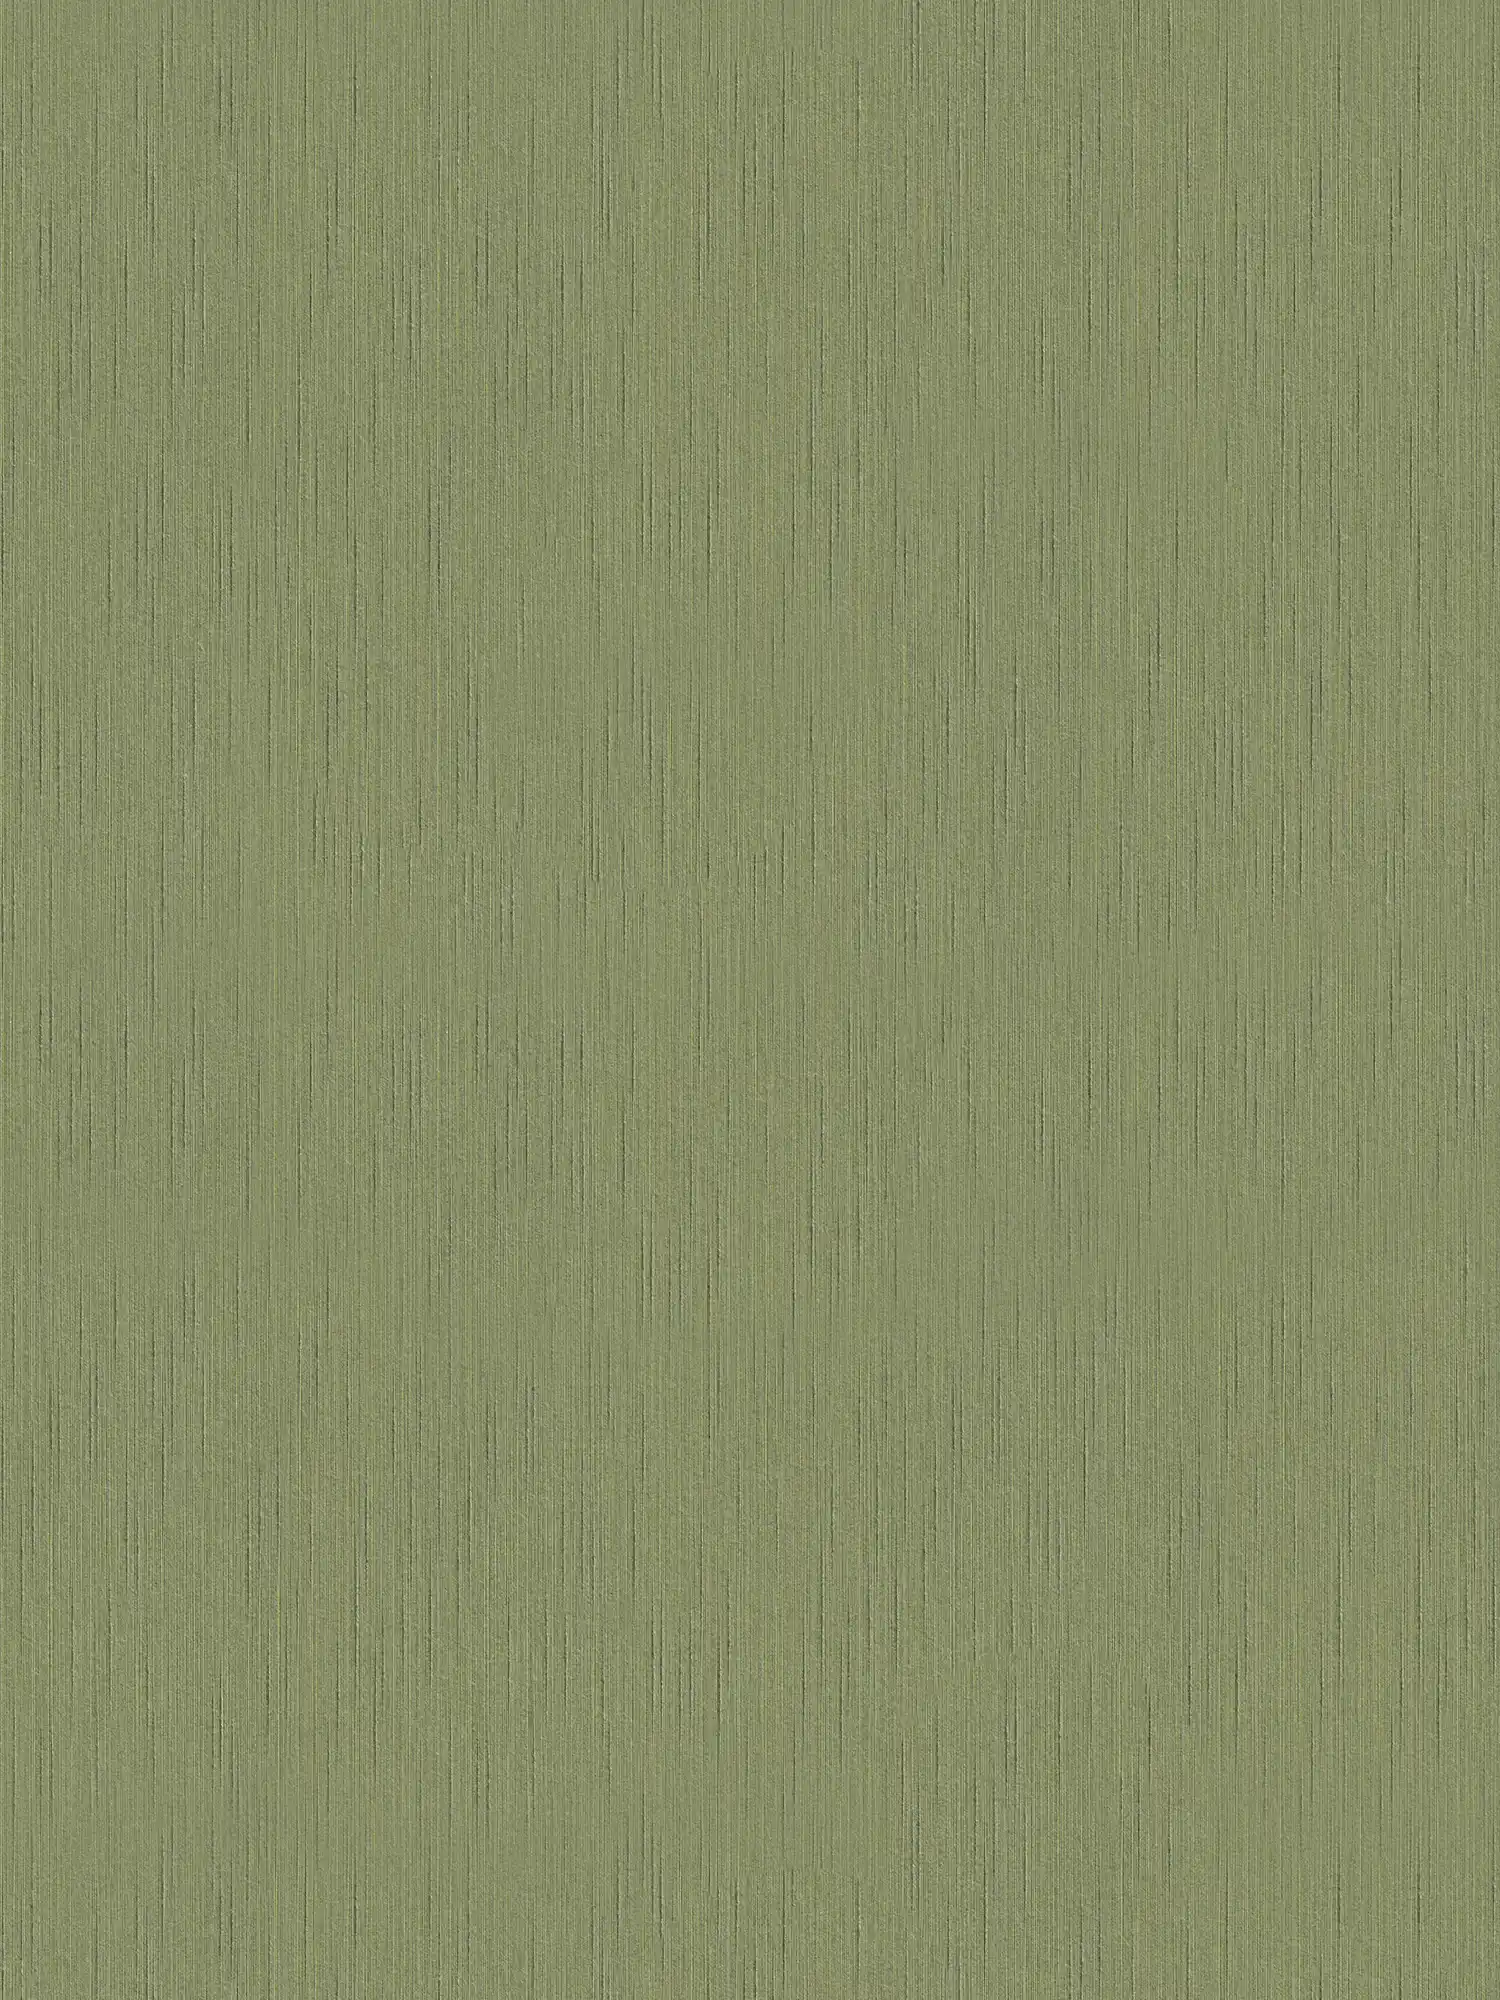 Papier peint intissé vert foncé à texture chinée - Vert
